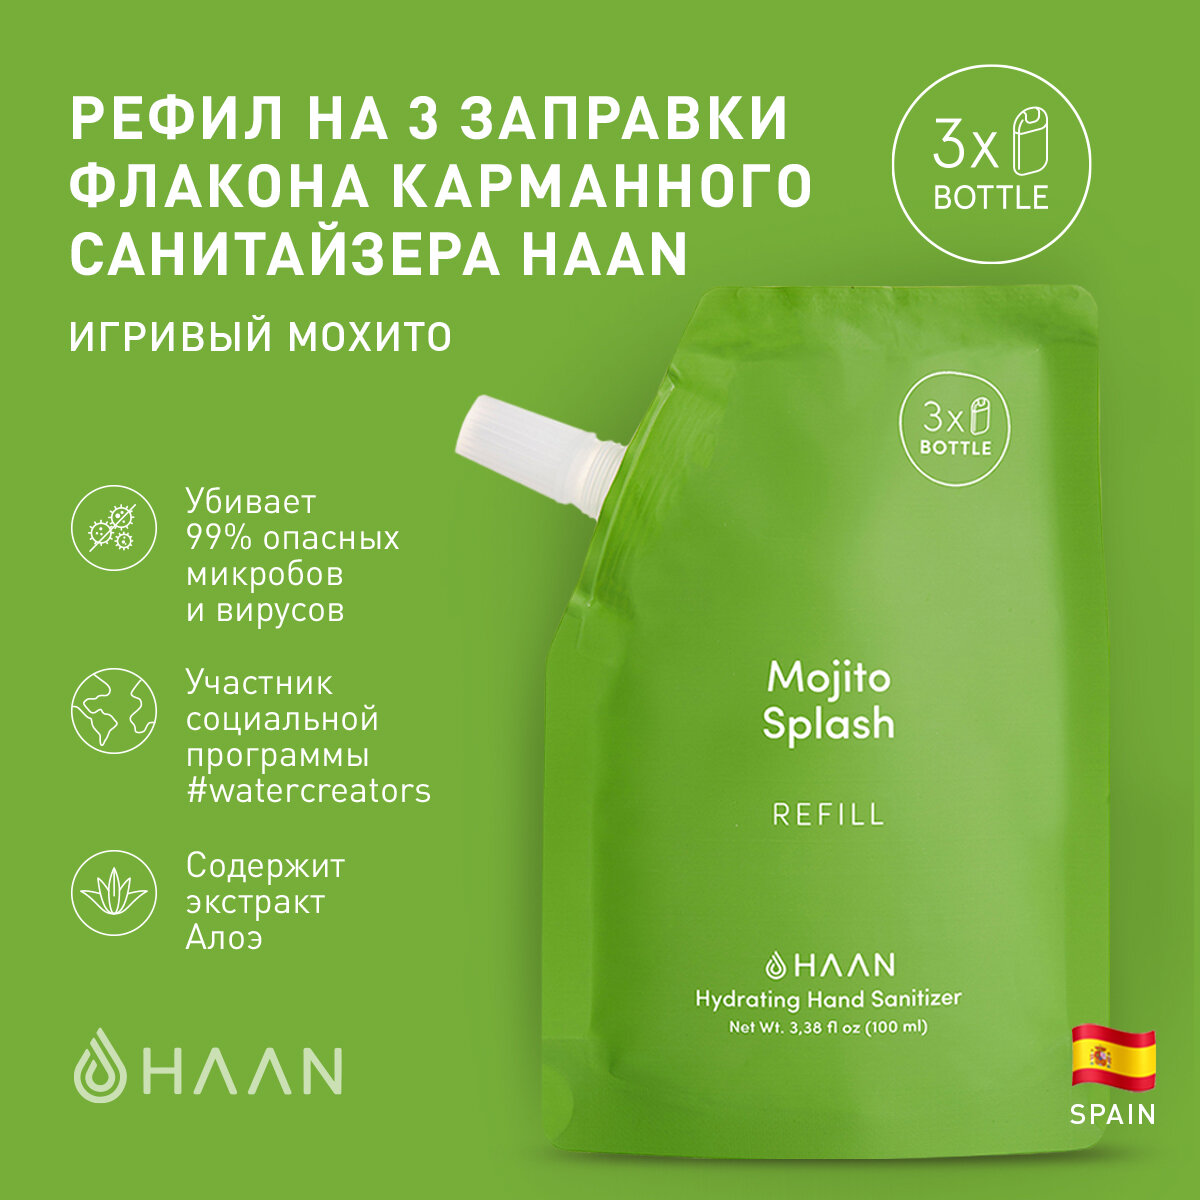 HAAN Рефилл для карманного санитайзера "Игривый Мохито" Pouch Hydrating Hand Sanitizer Mojito Splash 100 мл